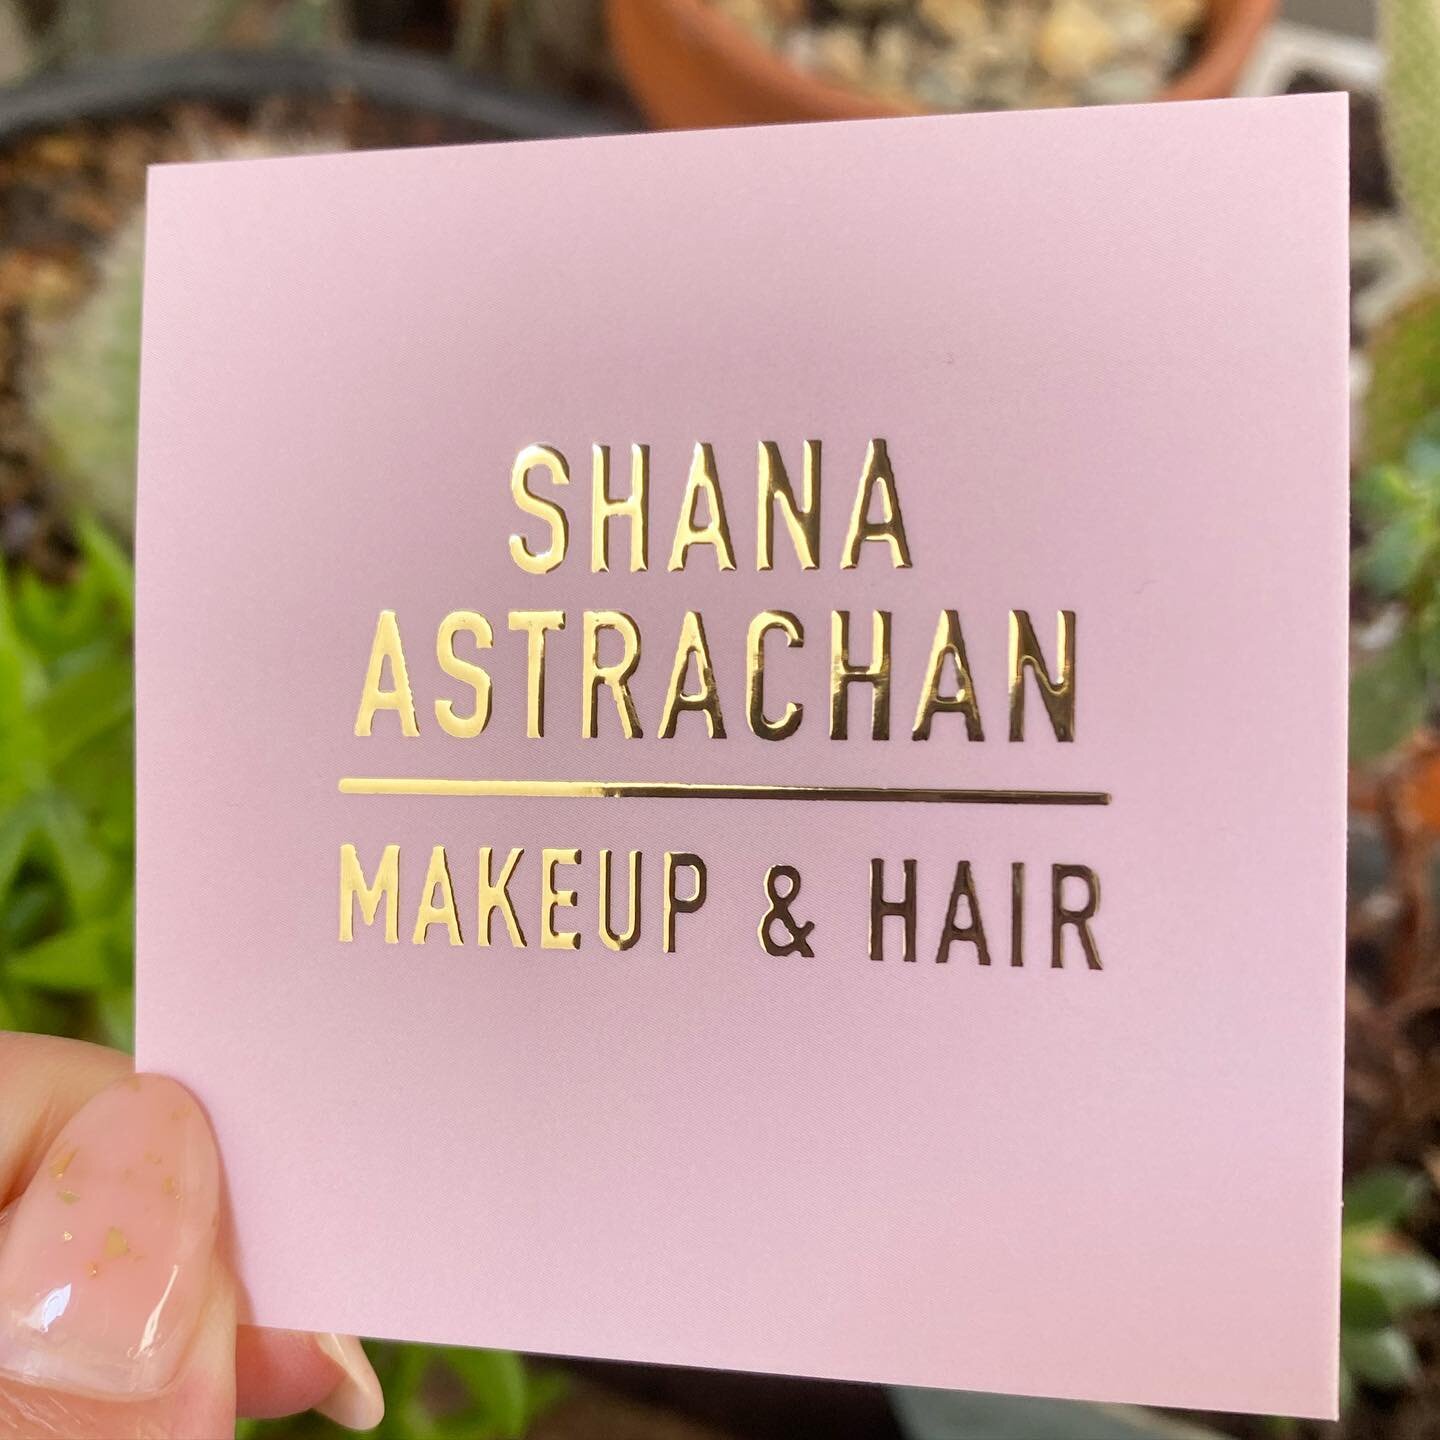 Pretty new business card I designed for myself ✨

All my info:
Shana Astrachan
shanamakeup@gmail.com
‪415.420.0527‬
www.shanamakeup.com

#makeupartist #makeupandhair #bayareamakeupartist #bayareamakeupandhair